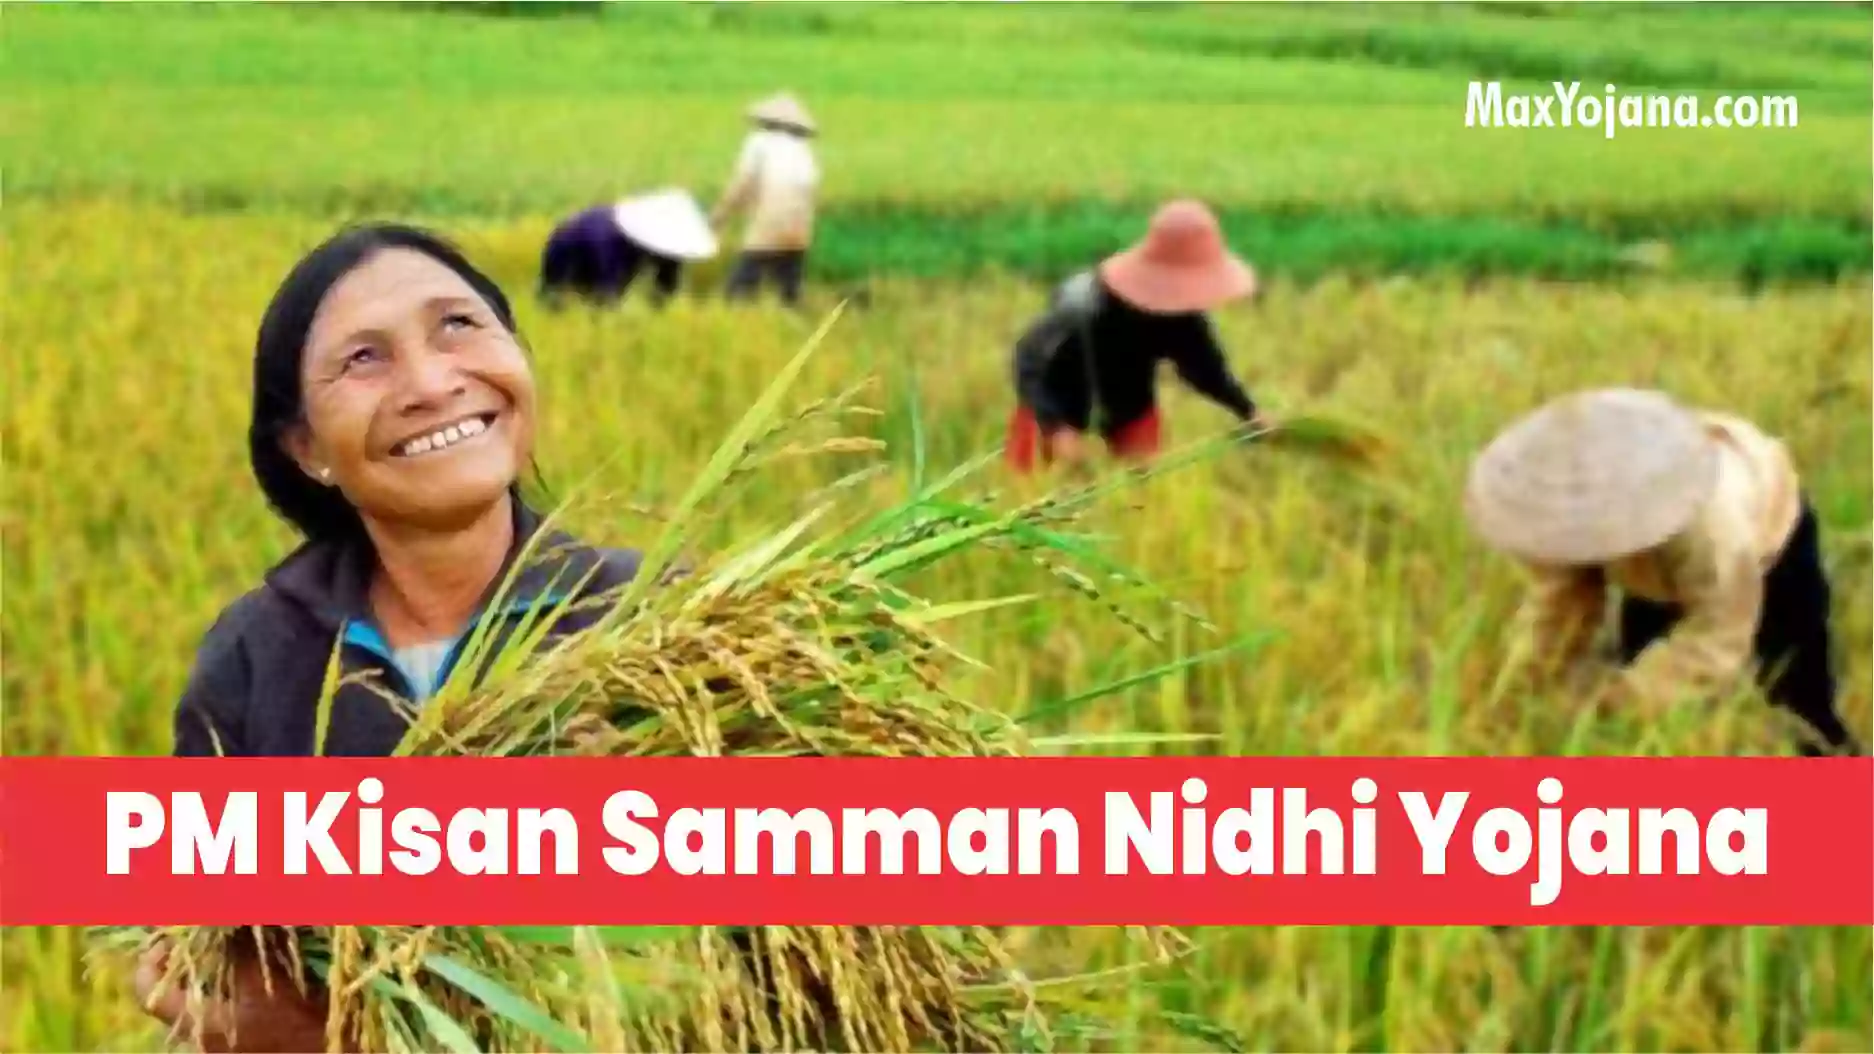 PM Kisan Samman Nidhi Yojana: Farmers of PM Kisan Samman Nidhi Yojana can soon get a gift of Rs 2 thousand.